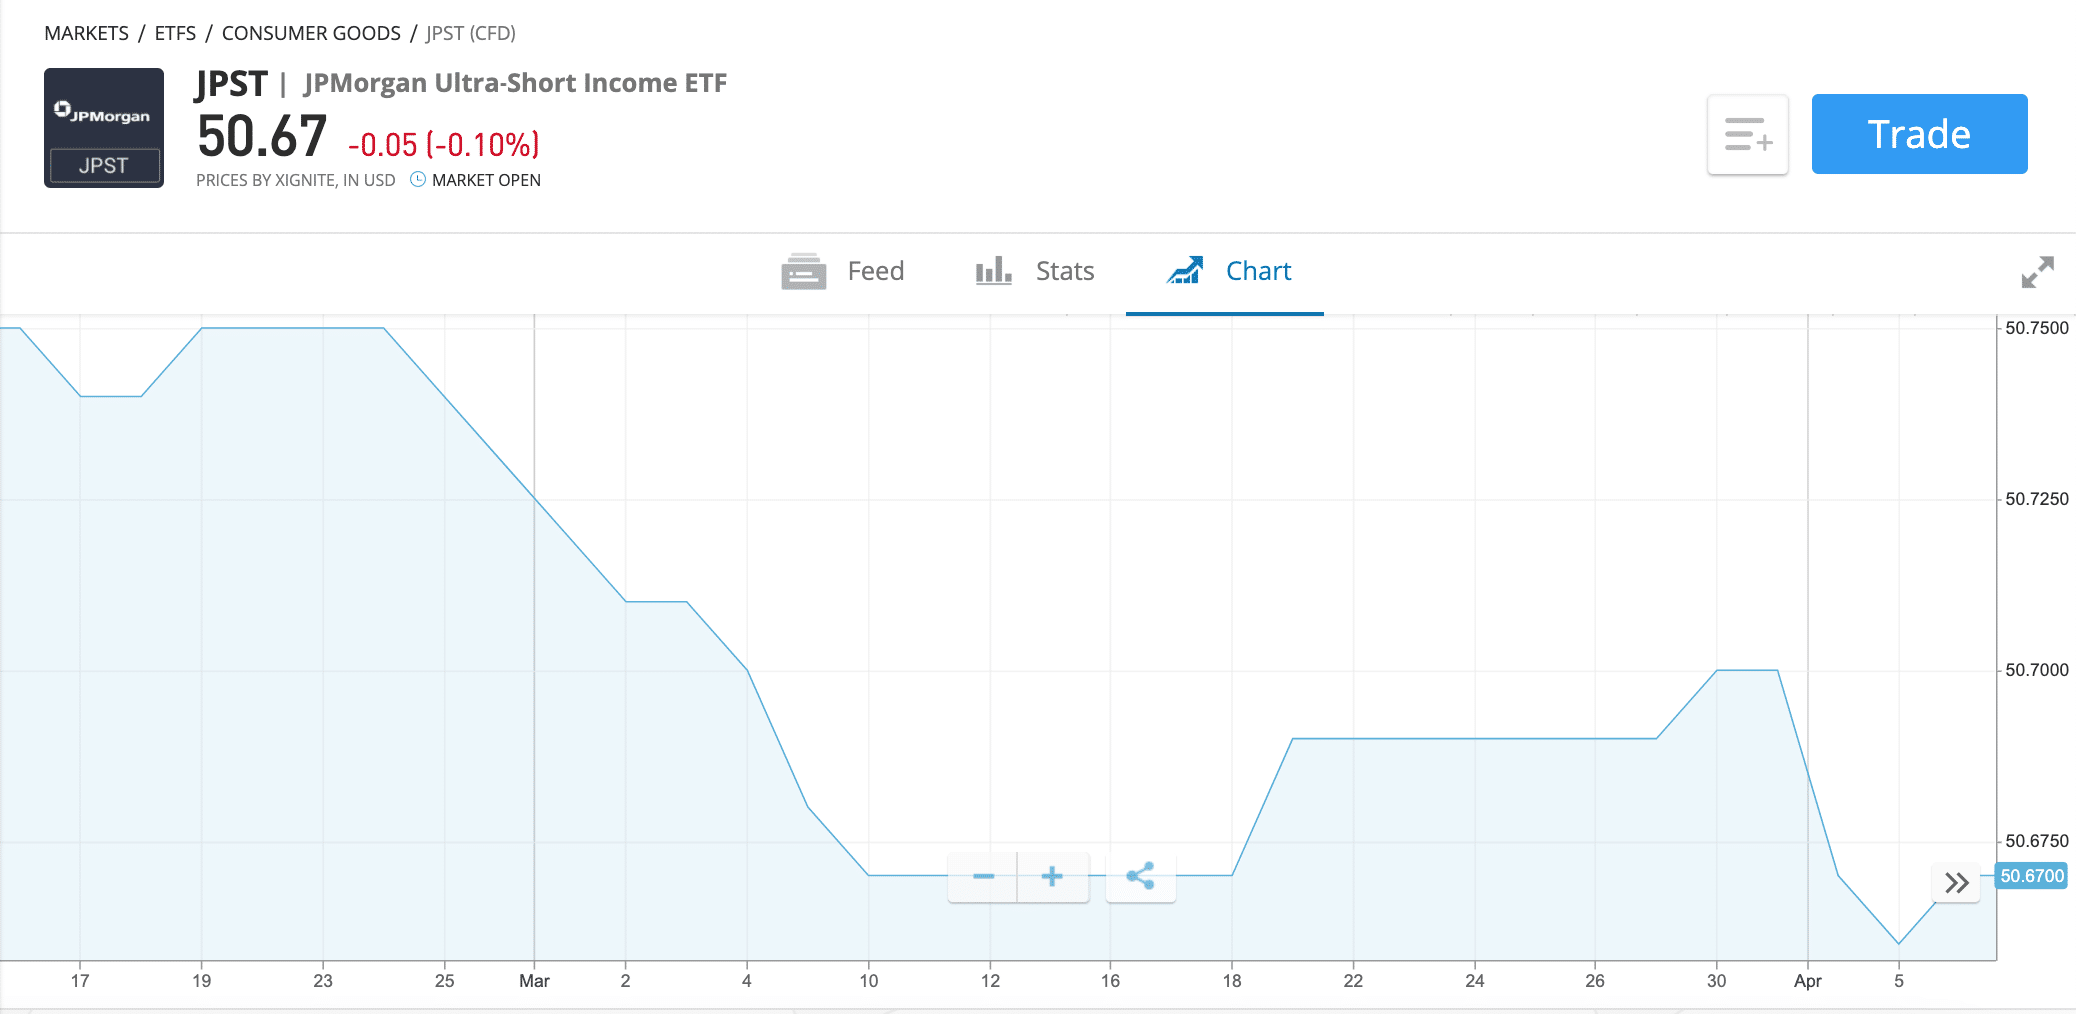 JPMorgan Ultra-Short Income ETF